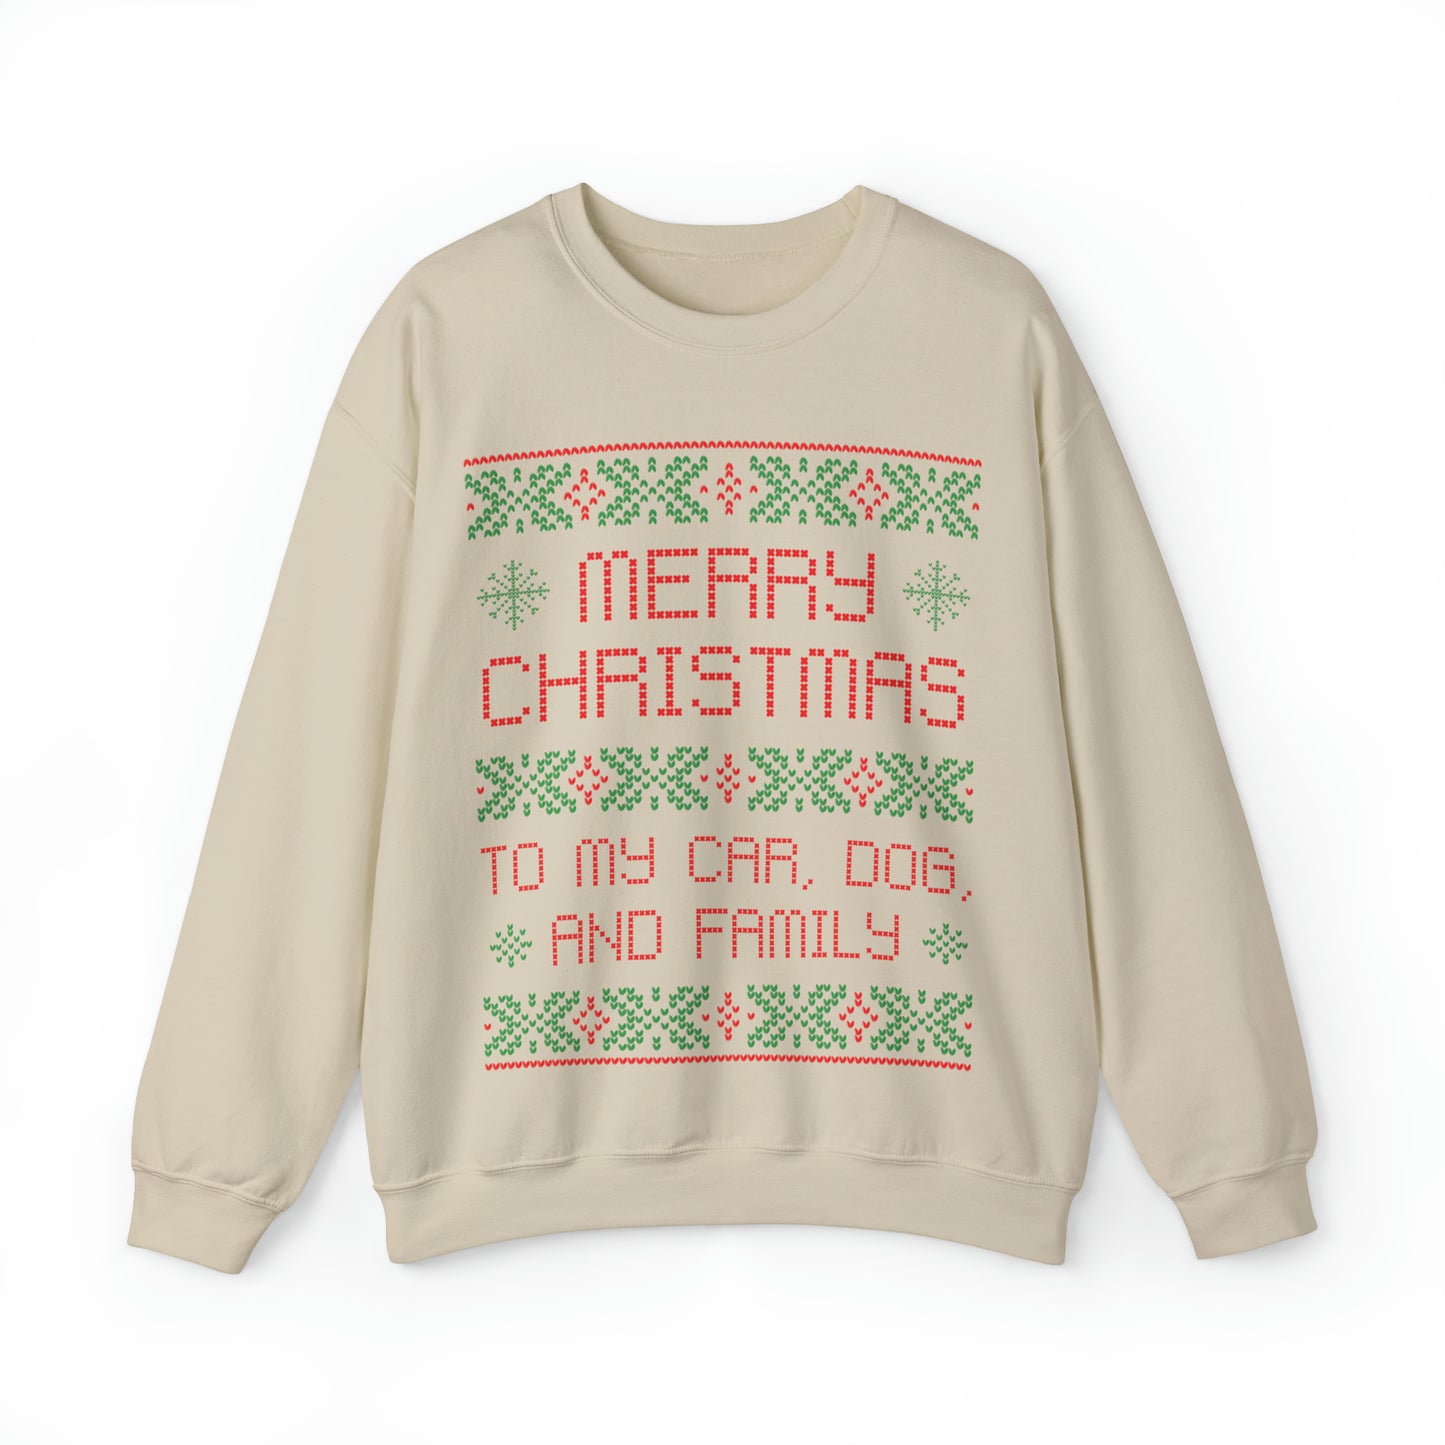 "Merry Christmas To My Car, Dog, And Family" Sweatshirt